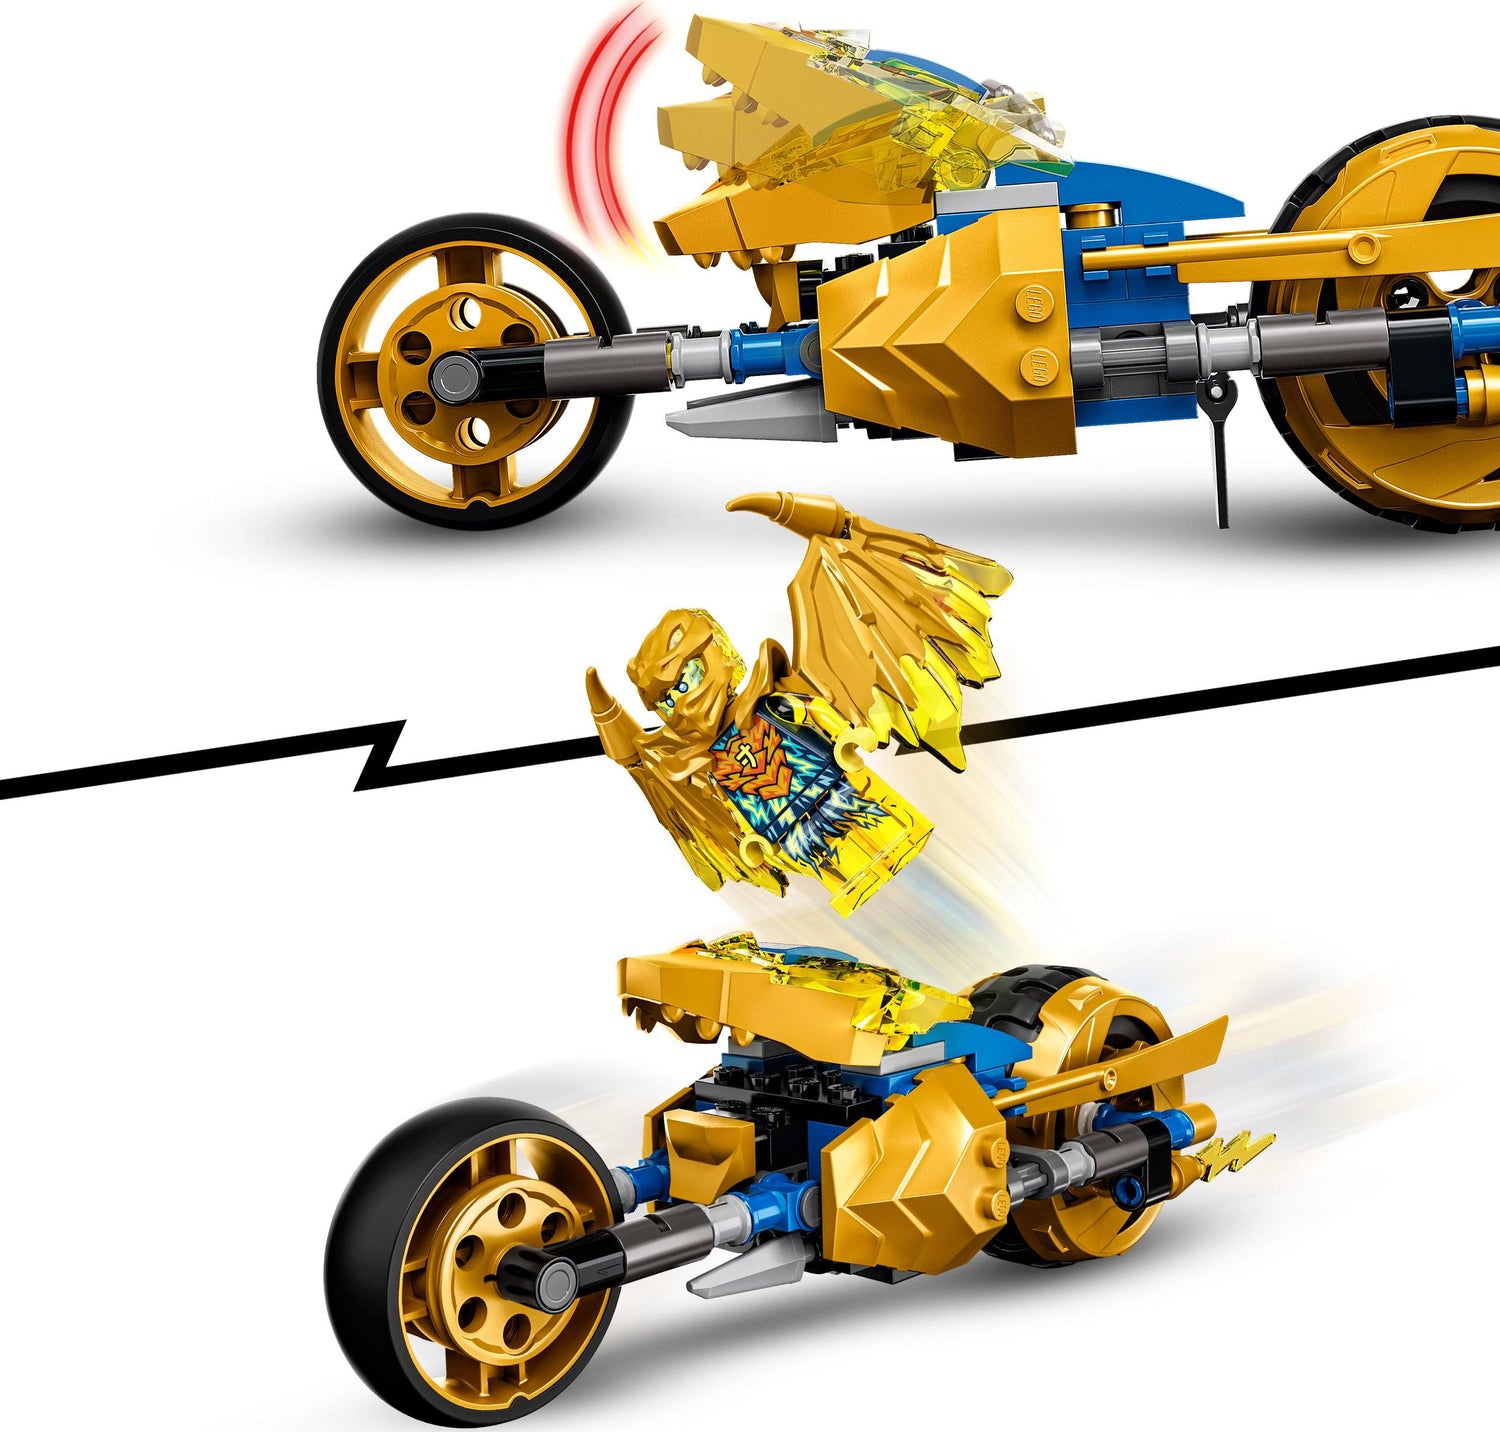 LEGO® NINJAGO Jay's Golden Dragon Motorbike Set